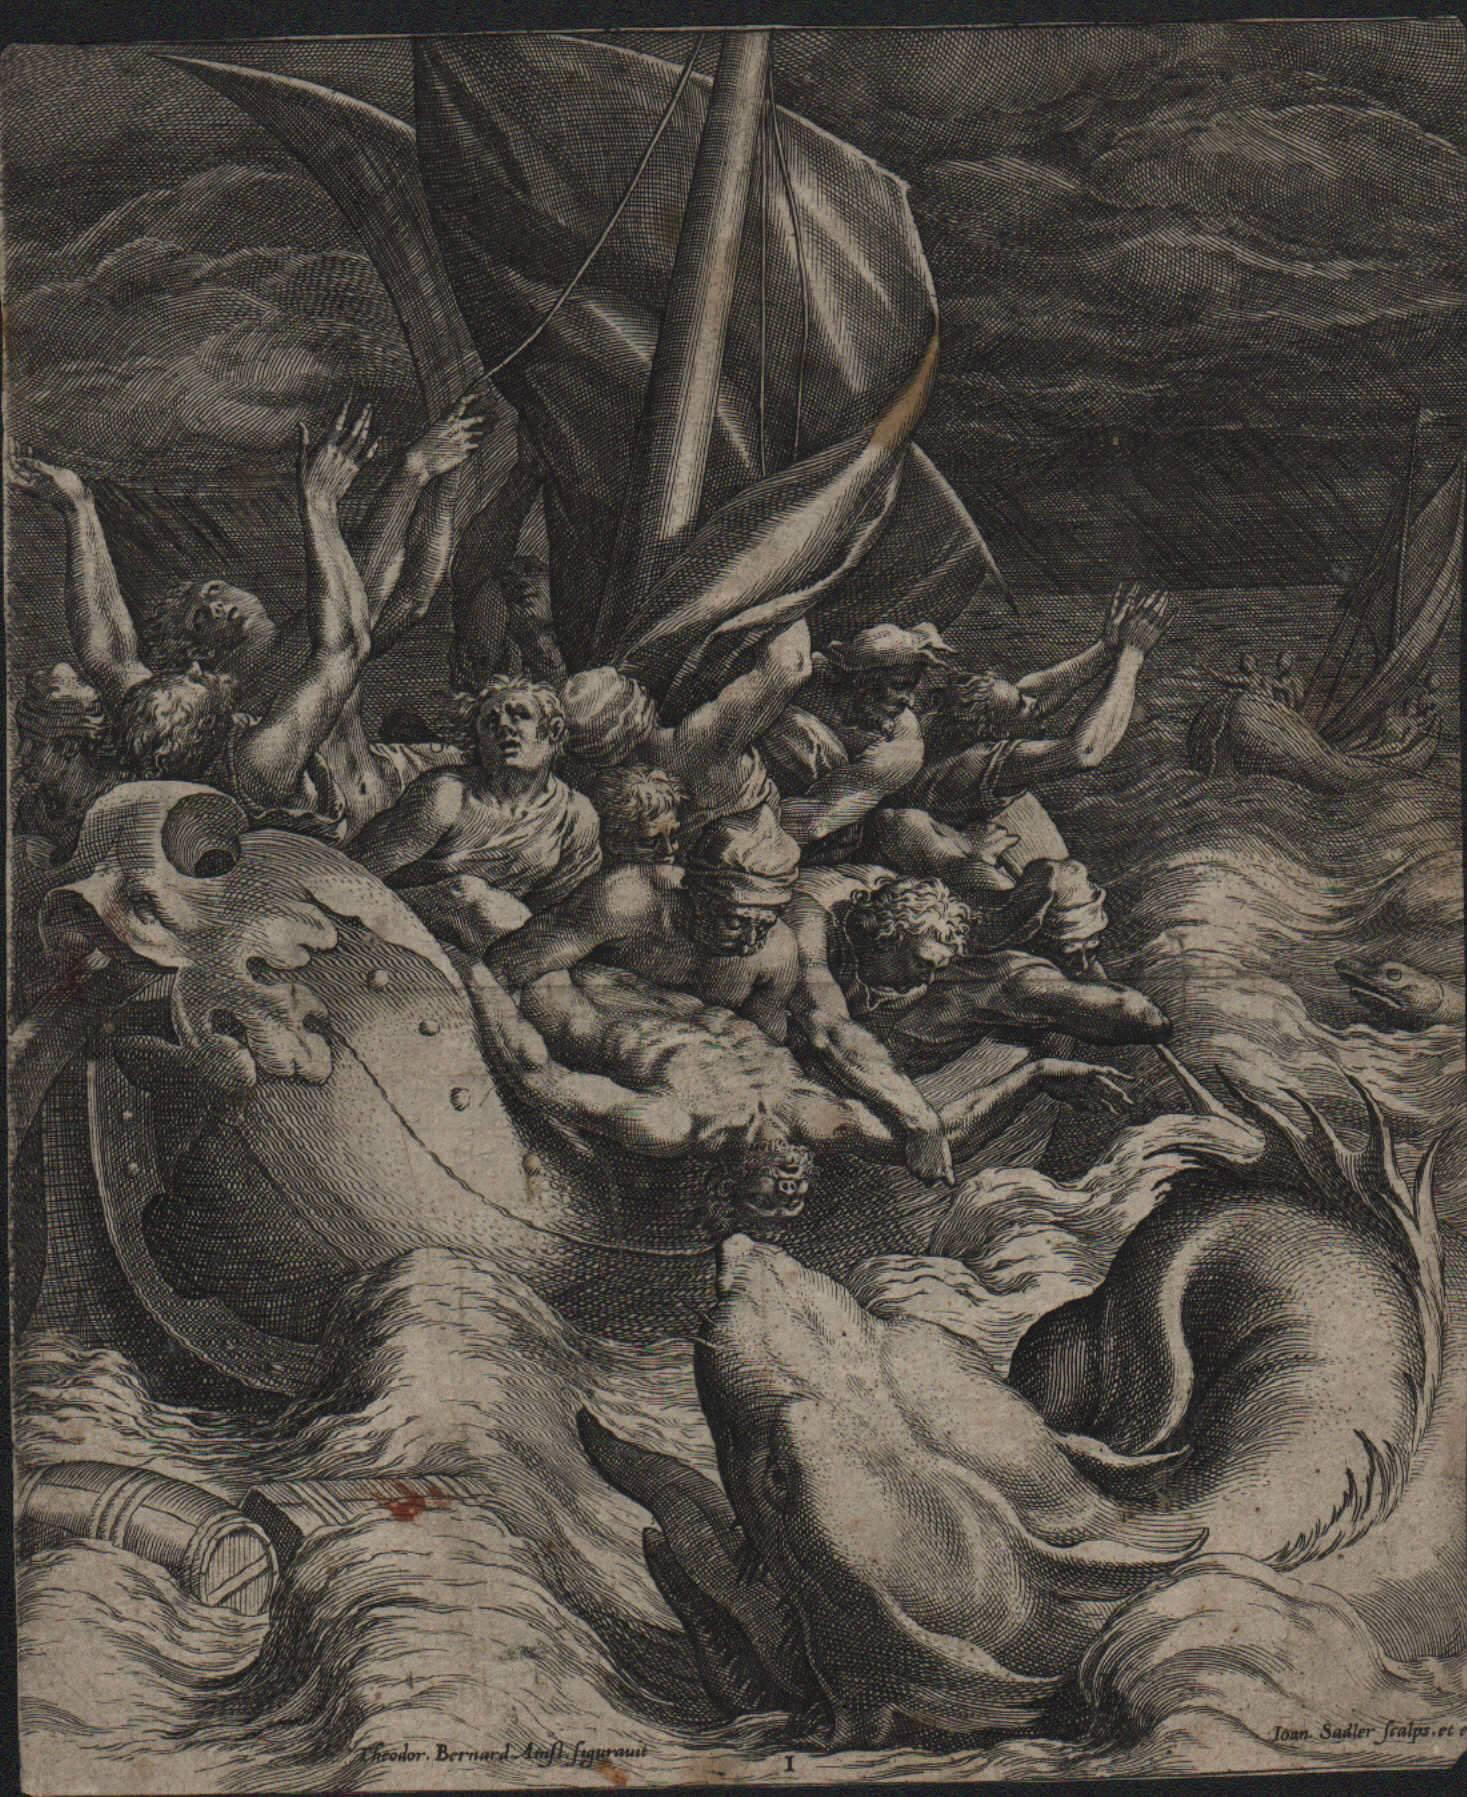 Johannes Sadeler I Figurative Print - Jonah Thrown Into the Whale - 1582 Old Master Engraving Religious